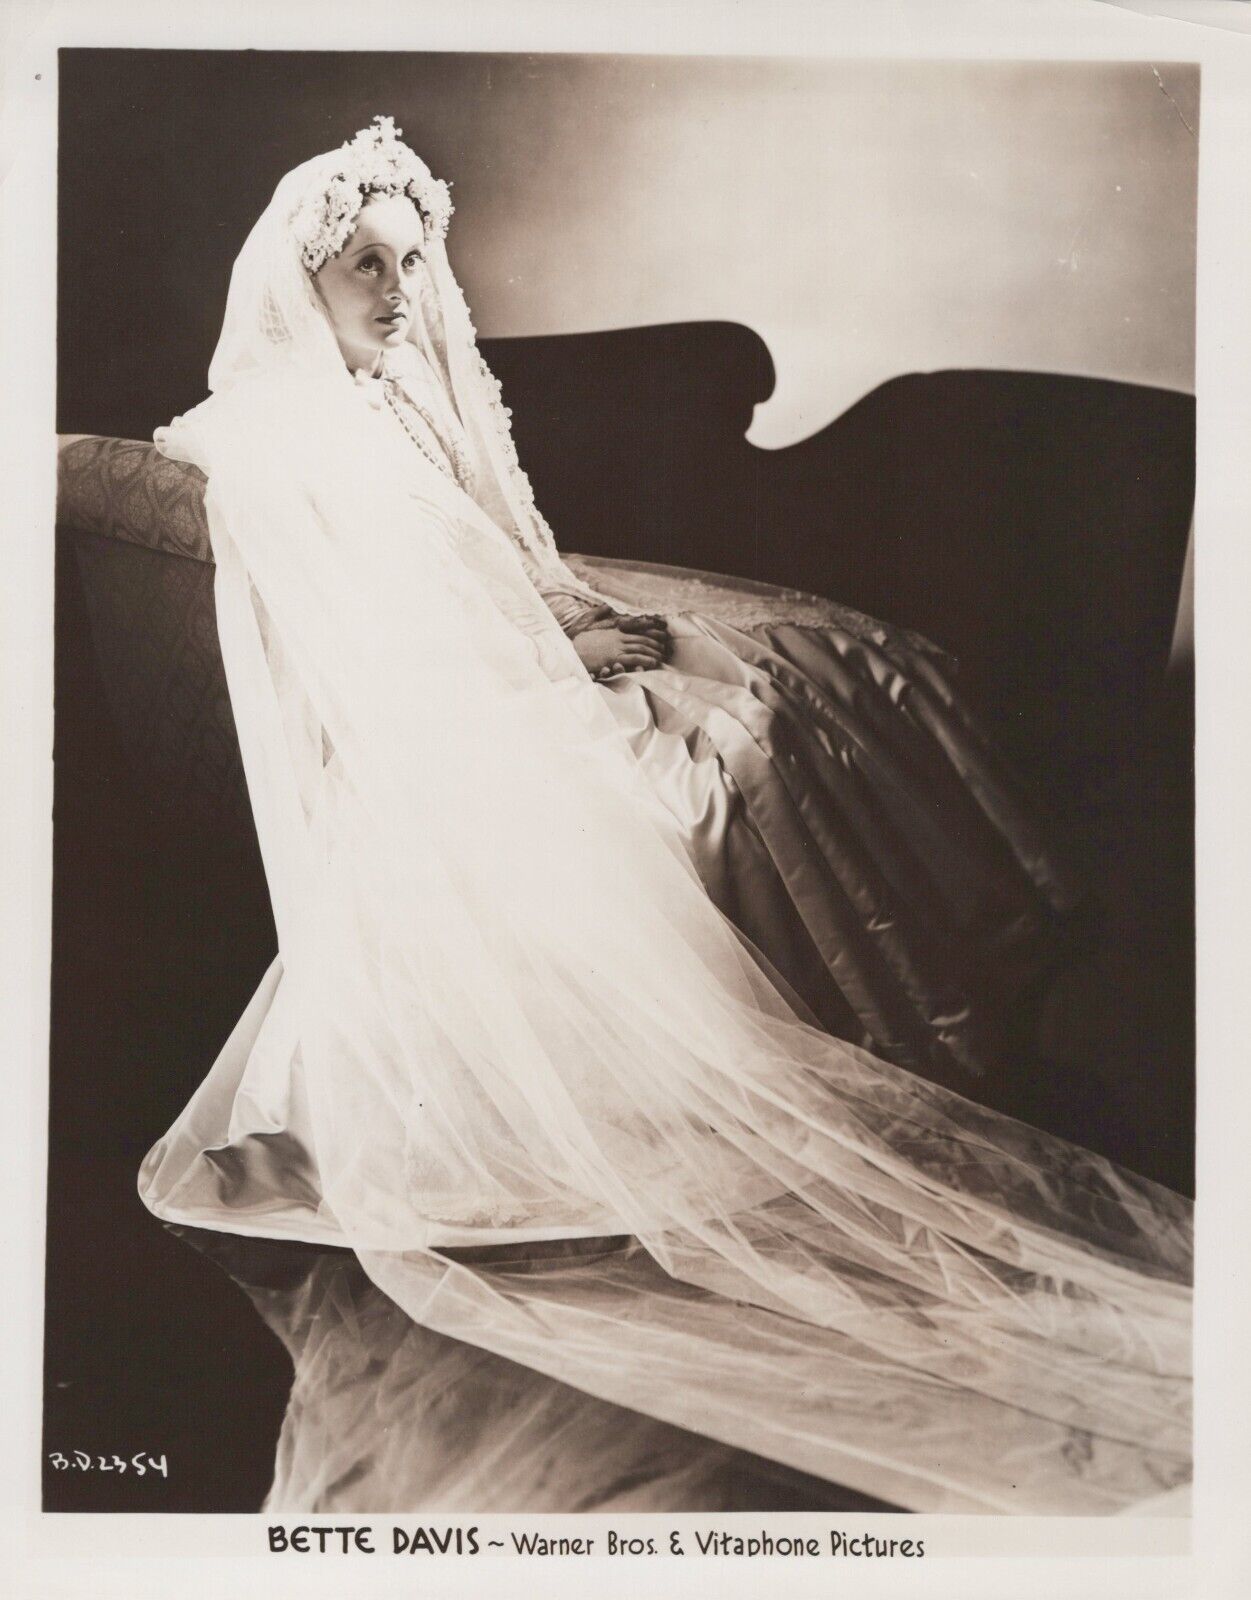 Bette Davis (1940s) ❤ Hollywood Beauty Stylish Glamorous Vintage Photo K 520